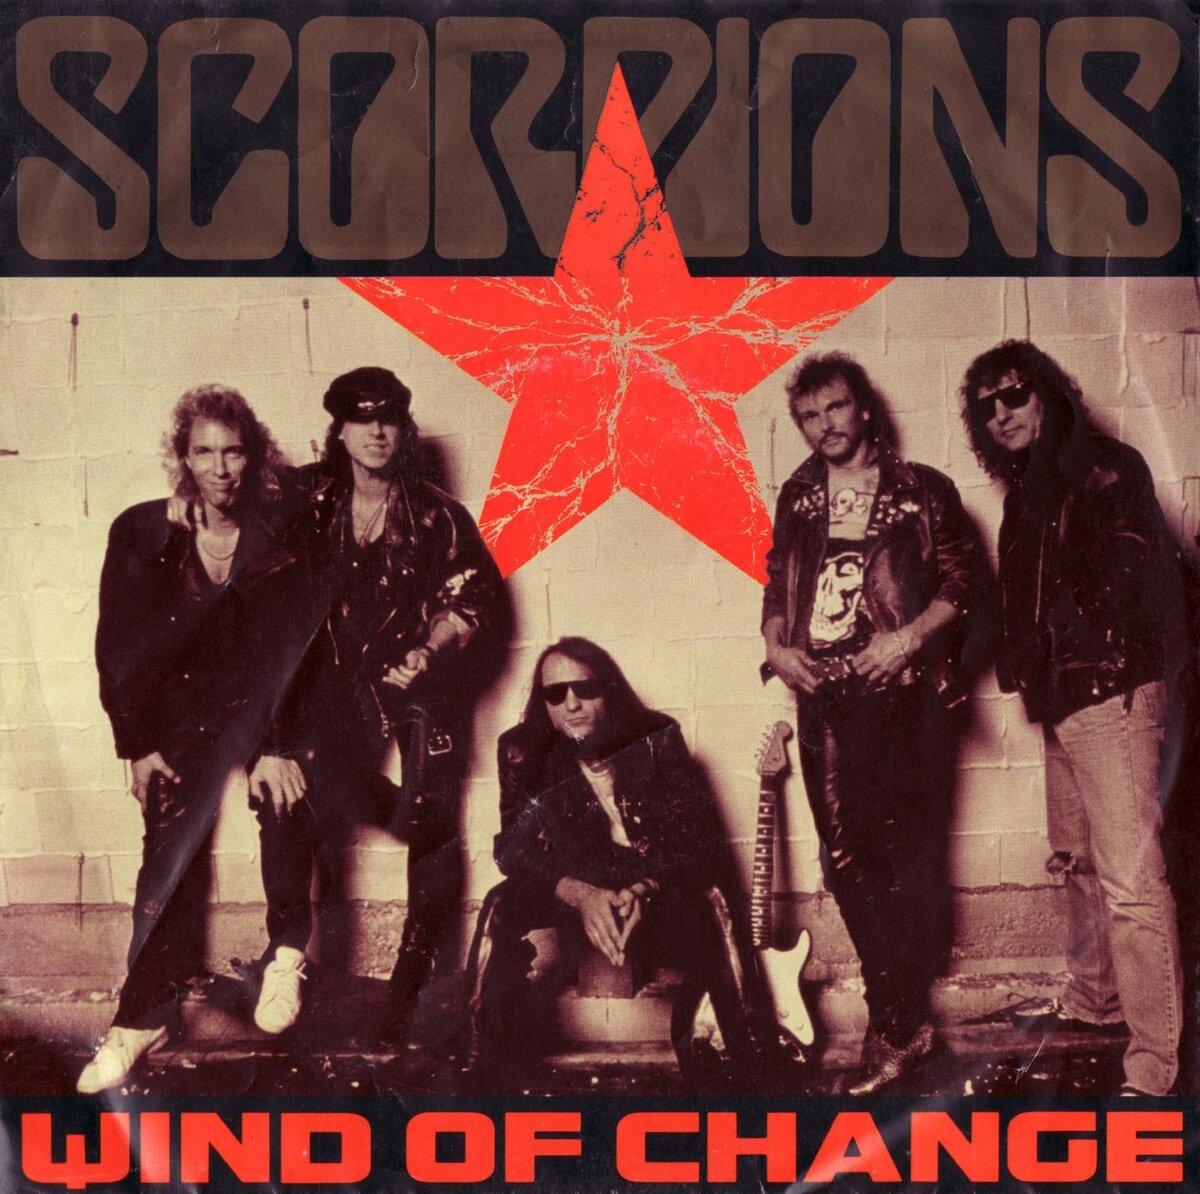 Scorpions Virgin Killer 1976 обложка. Scorpions 1975. Scorpions Wind of change обложка. Альбом Virgin Killer Scorpions.